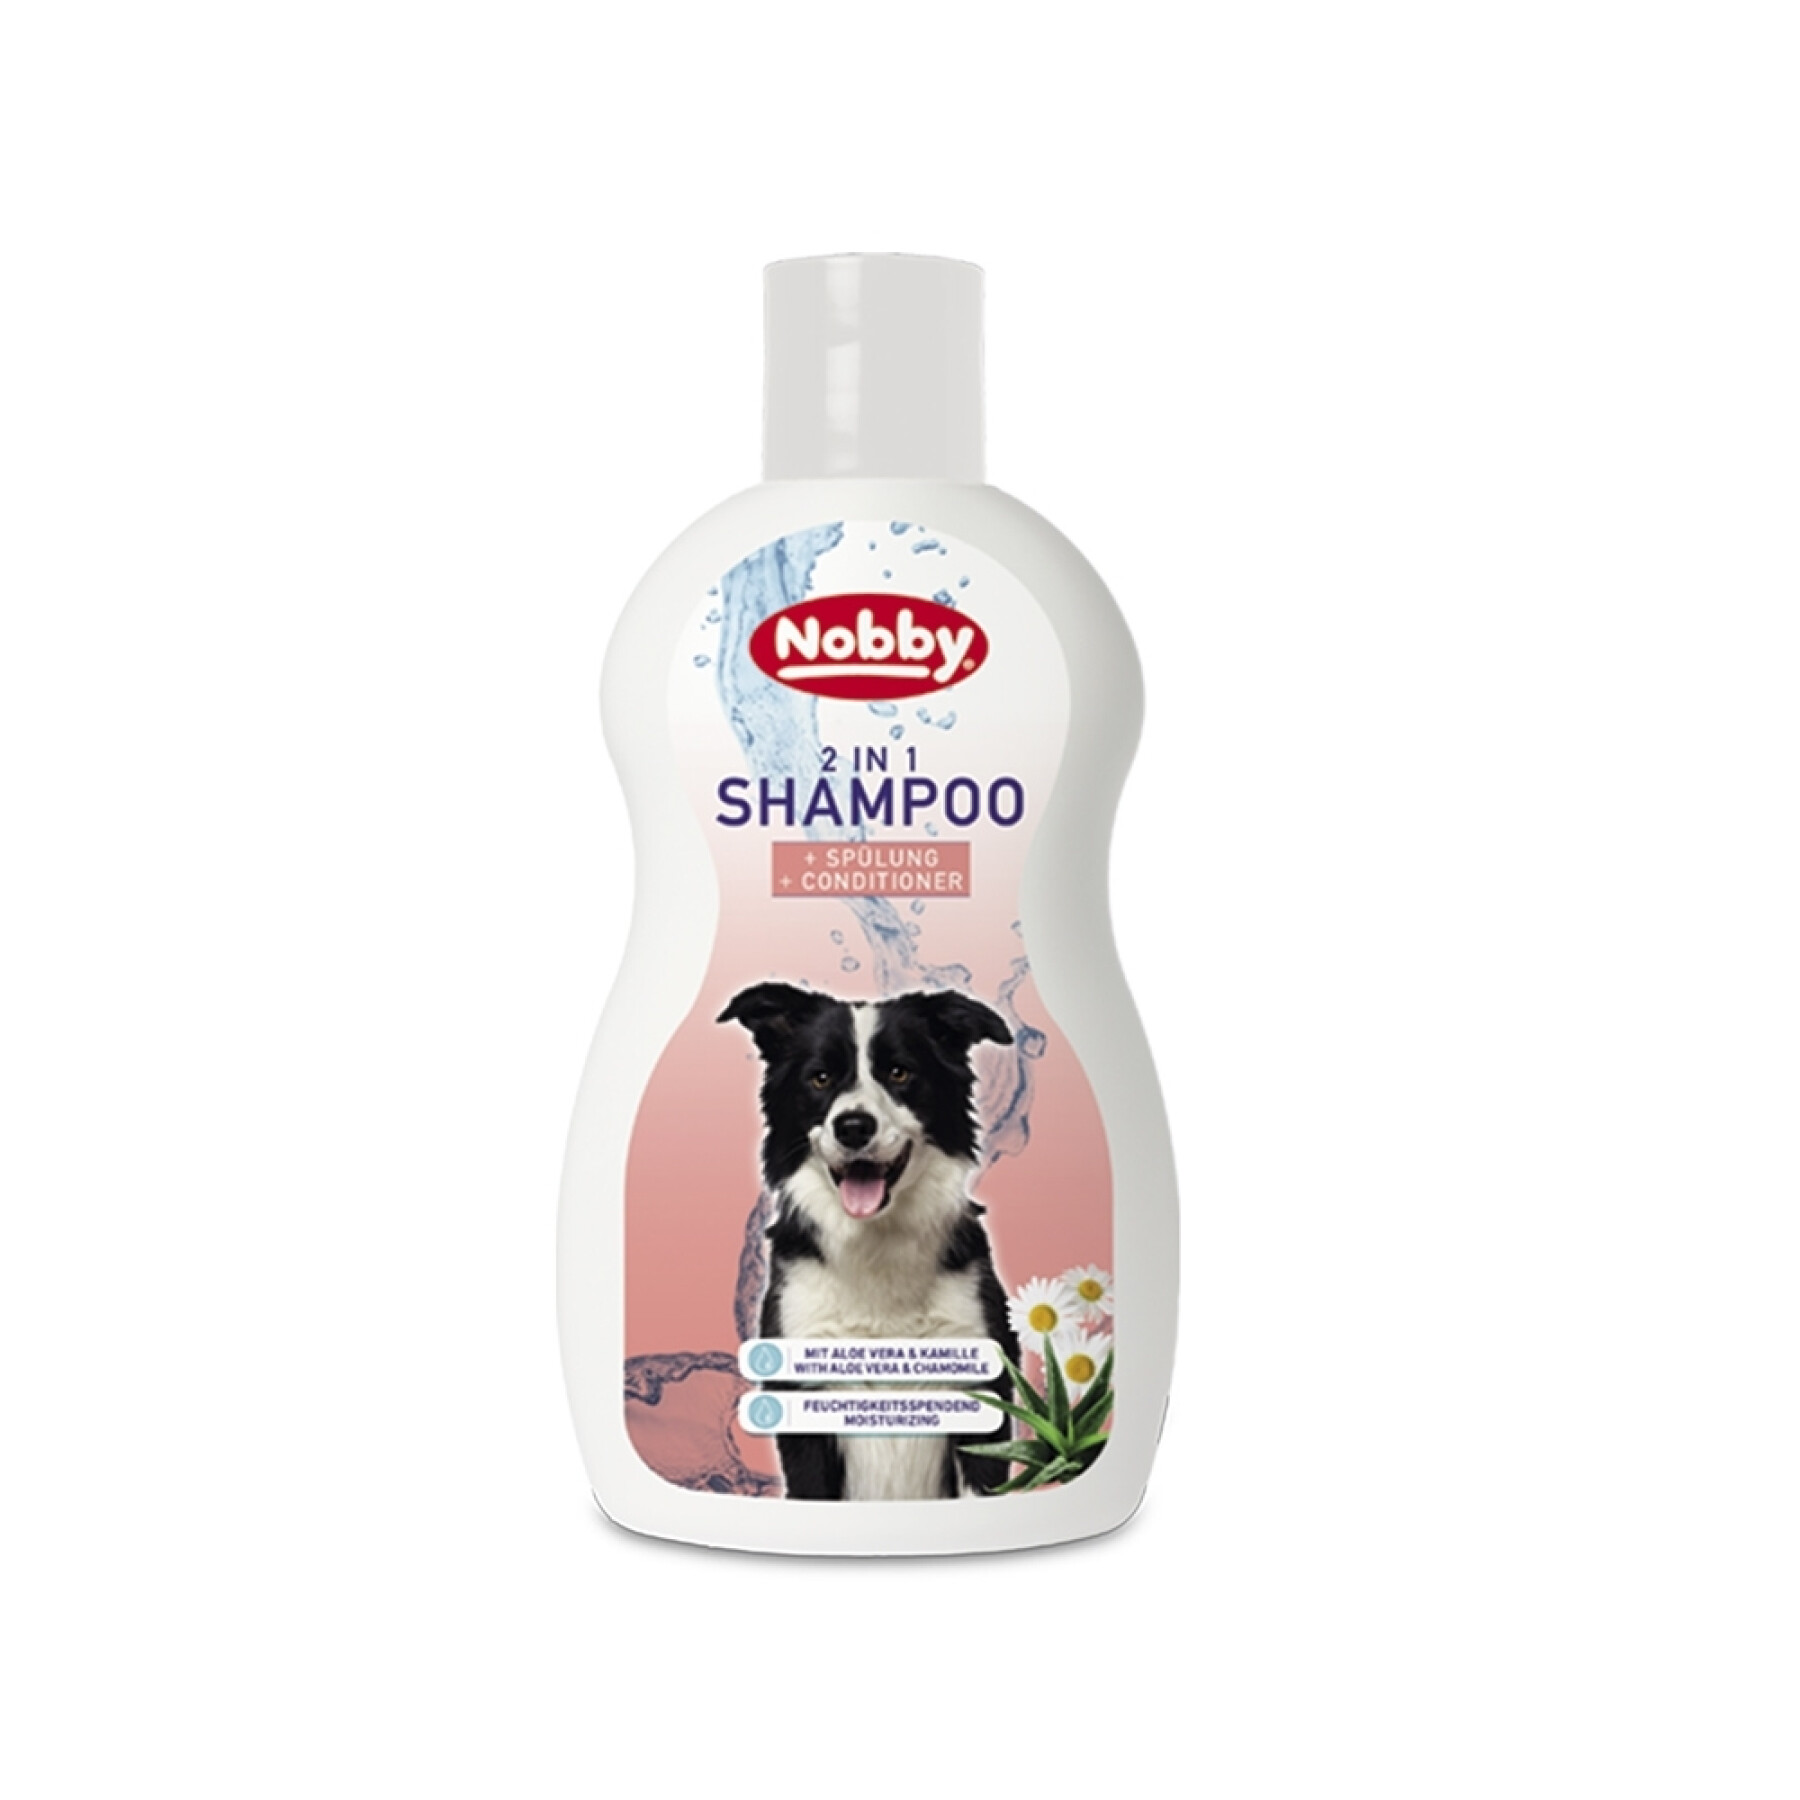 Hundeshampoo 2 in 1 Nobby Pet 1000 ml